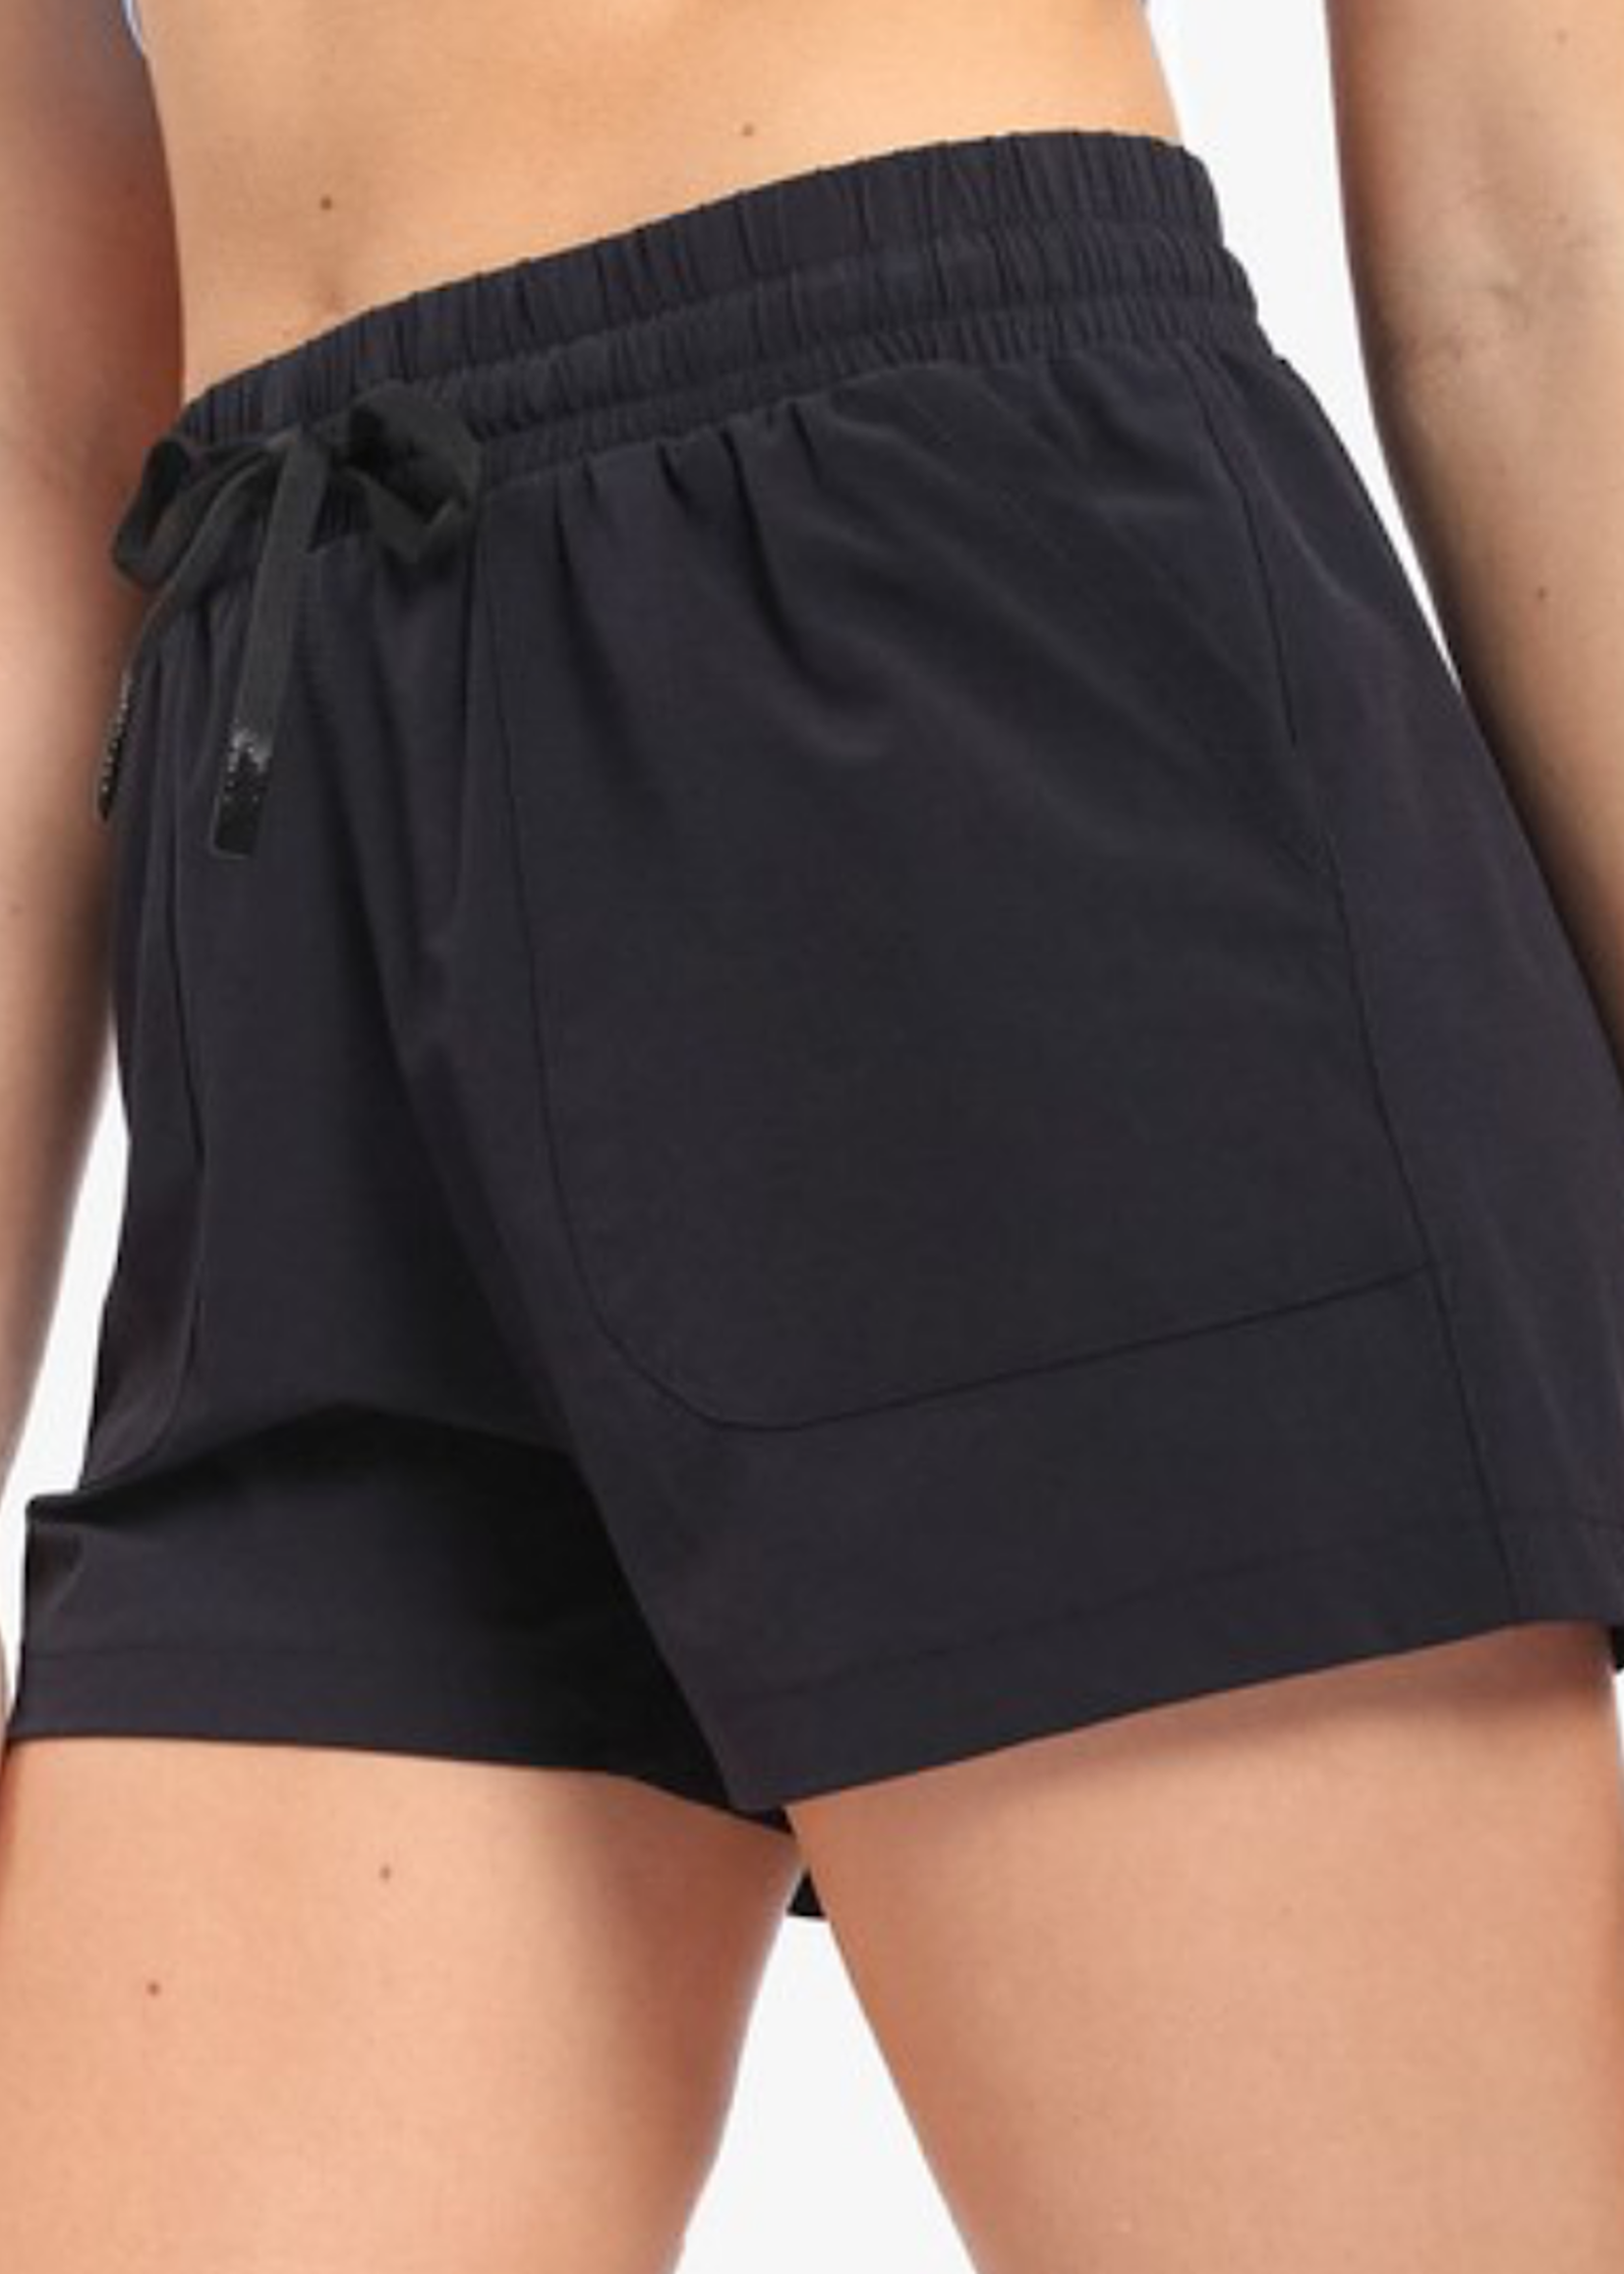 Black Athleisure Shorts with Drawstring